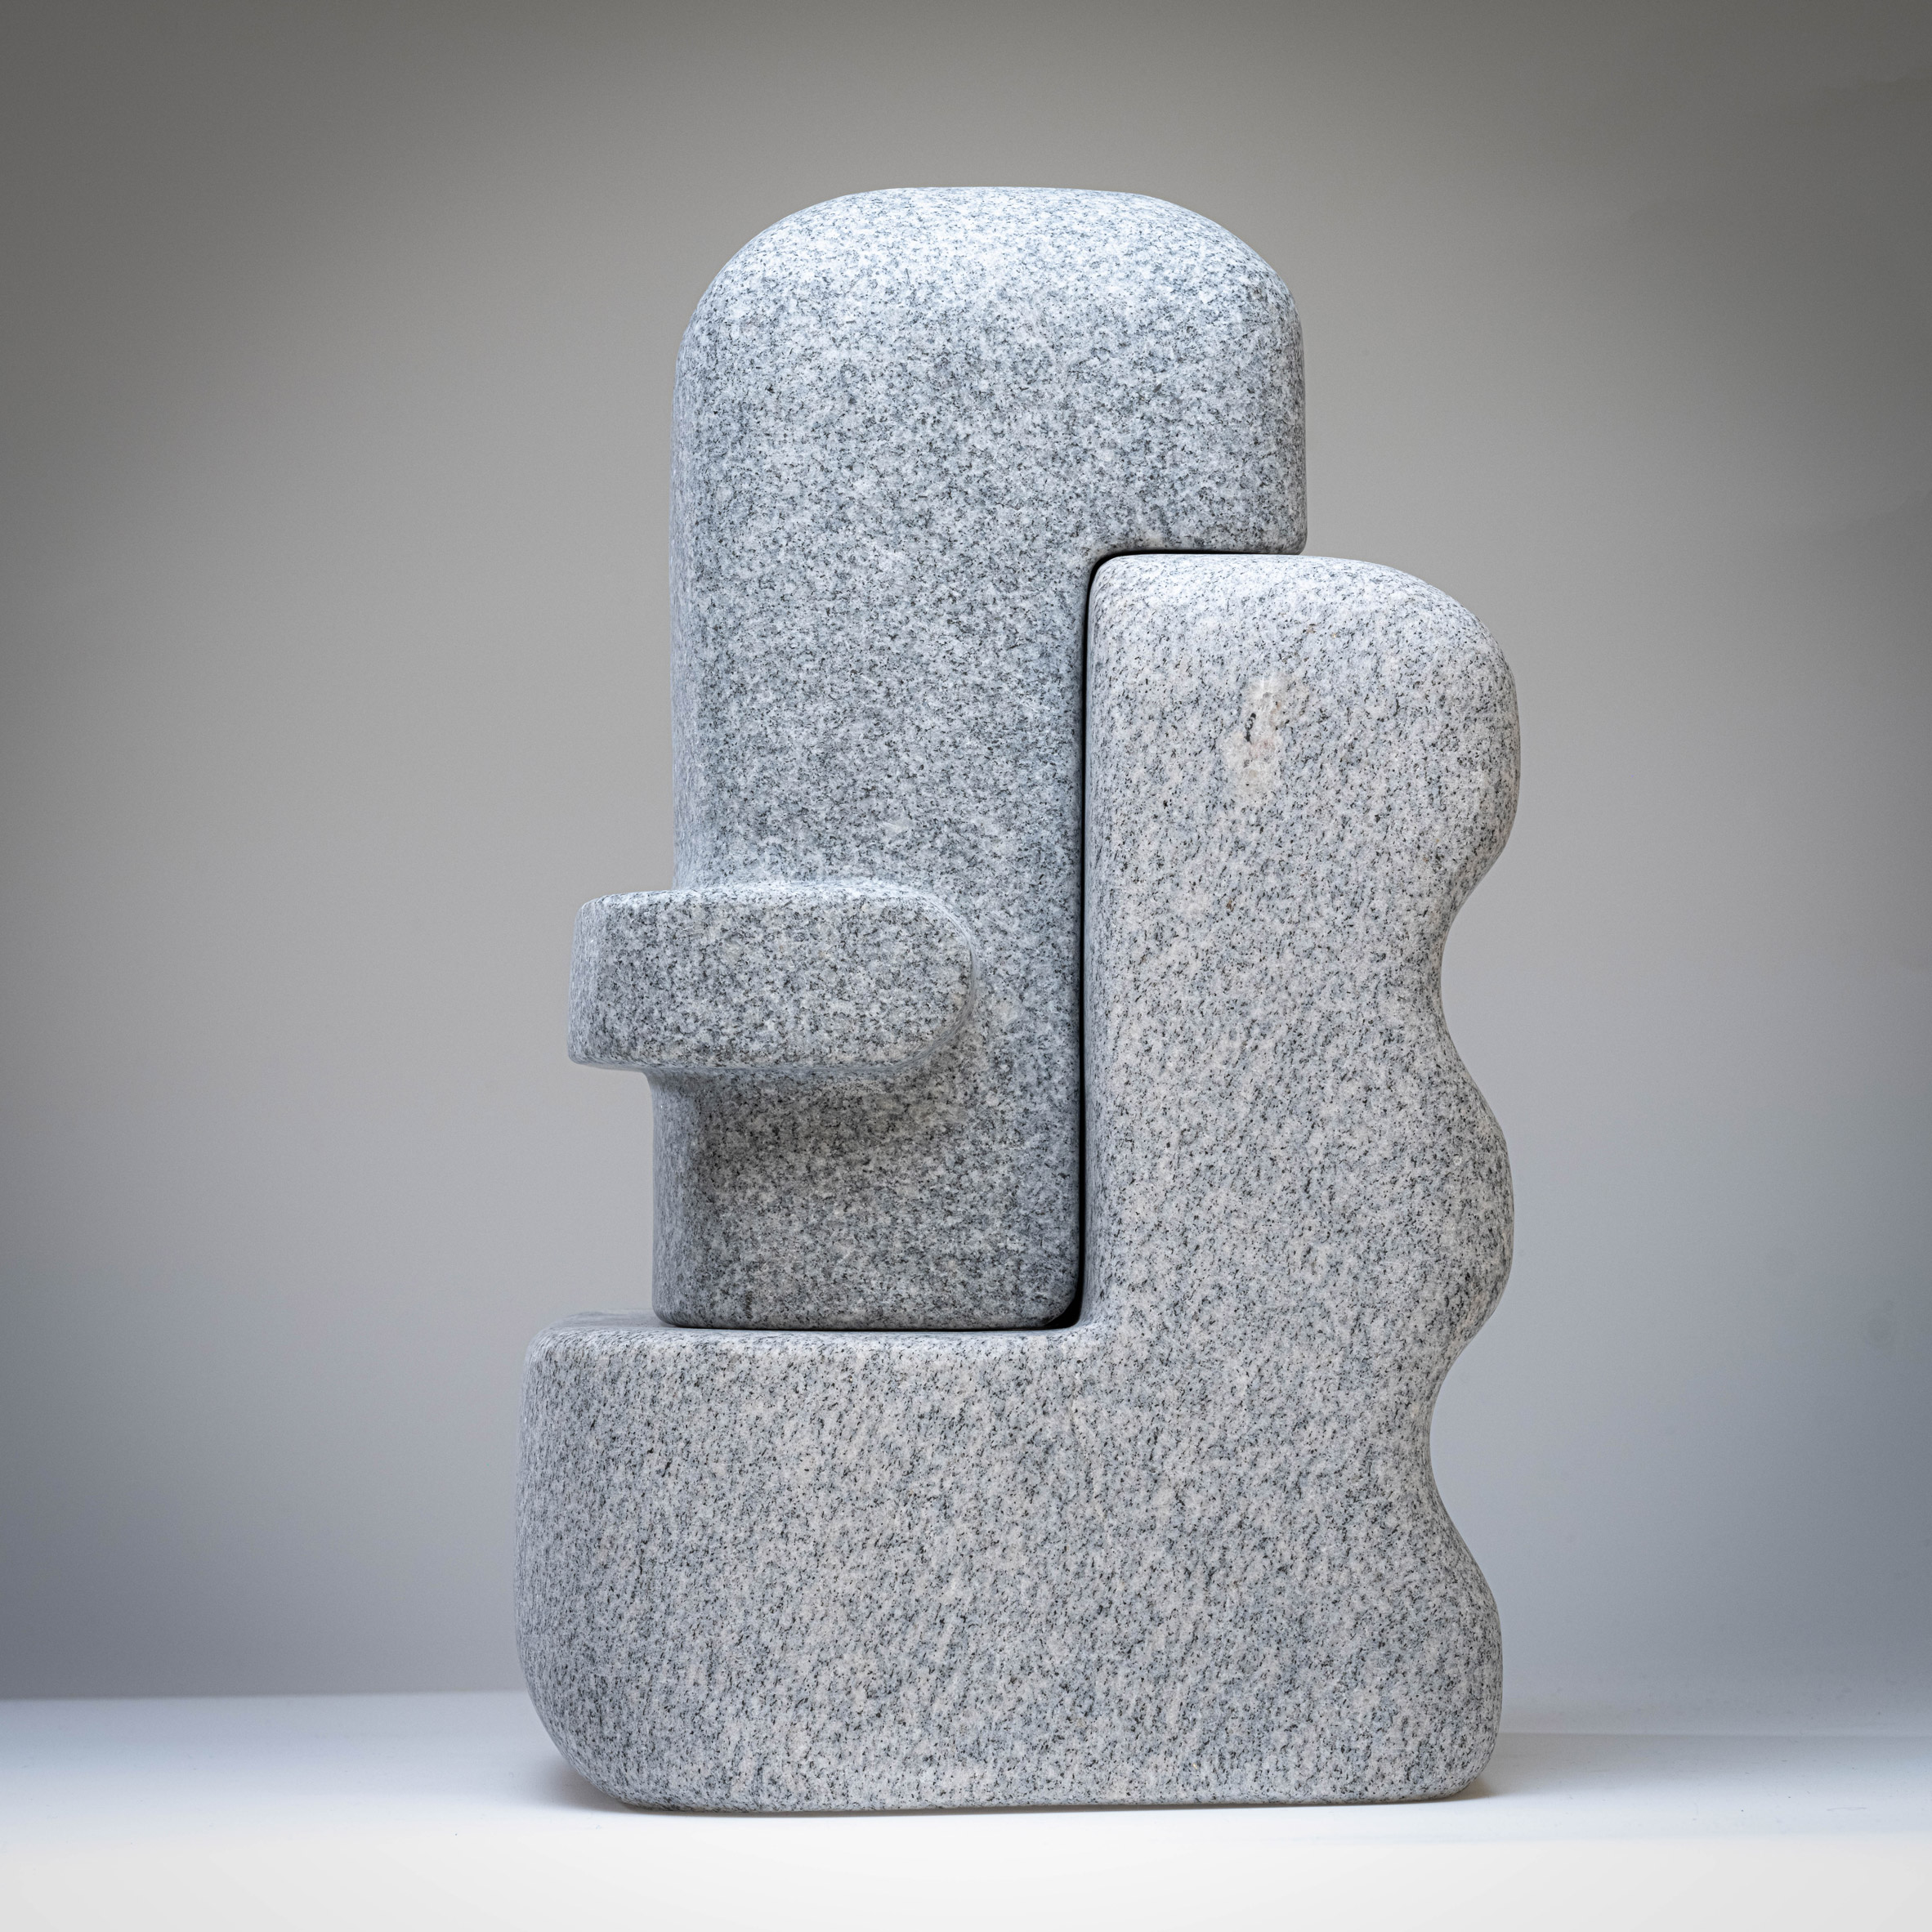 Howard stone sculptures by Matt Byrd